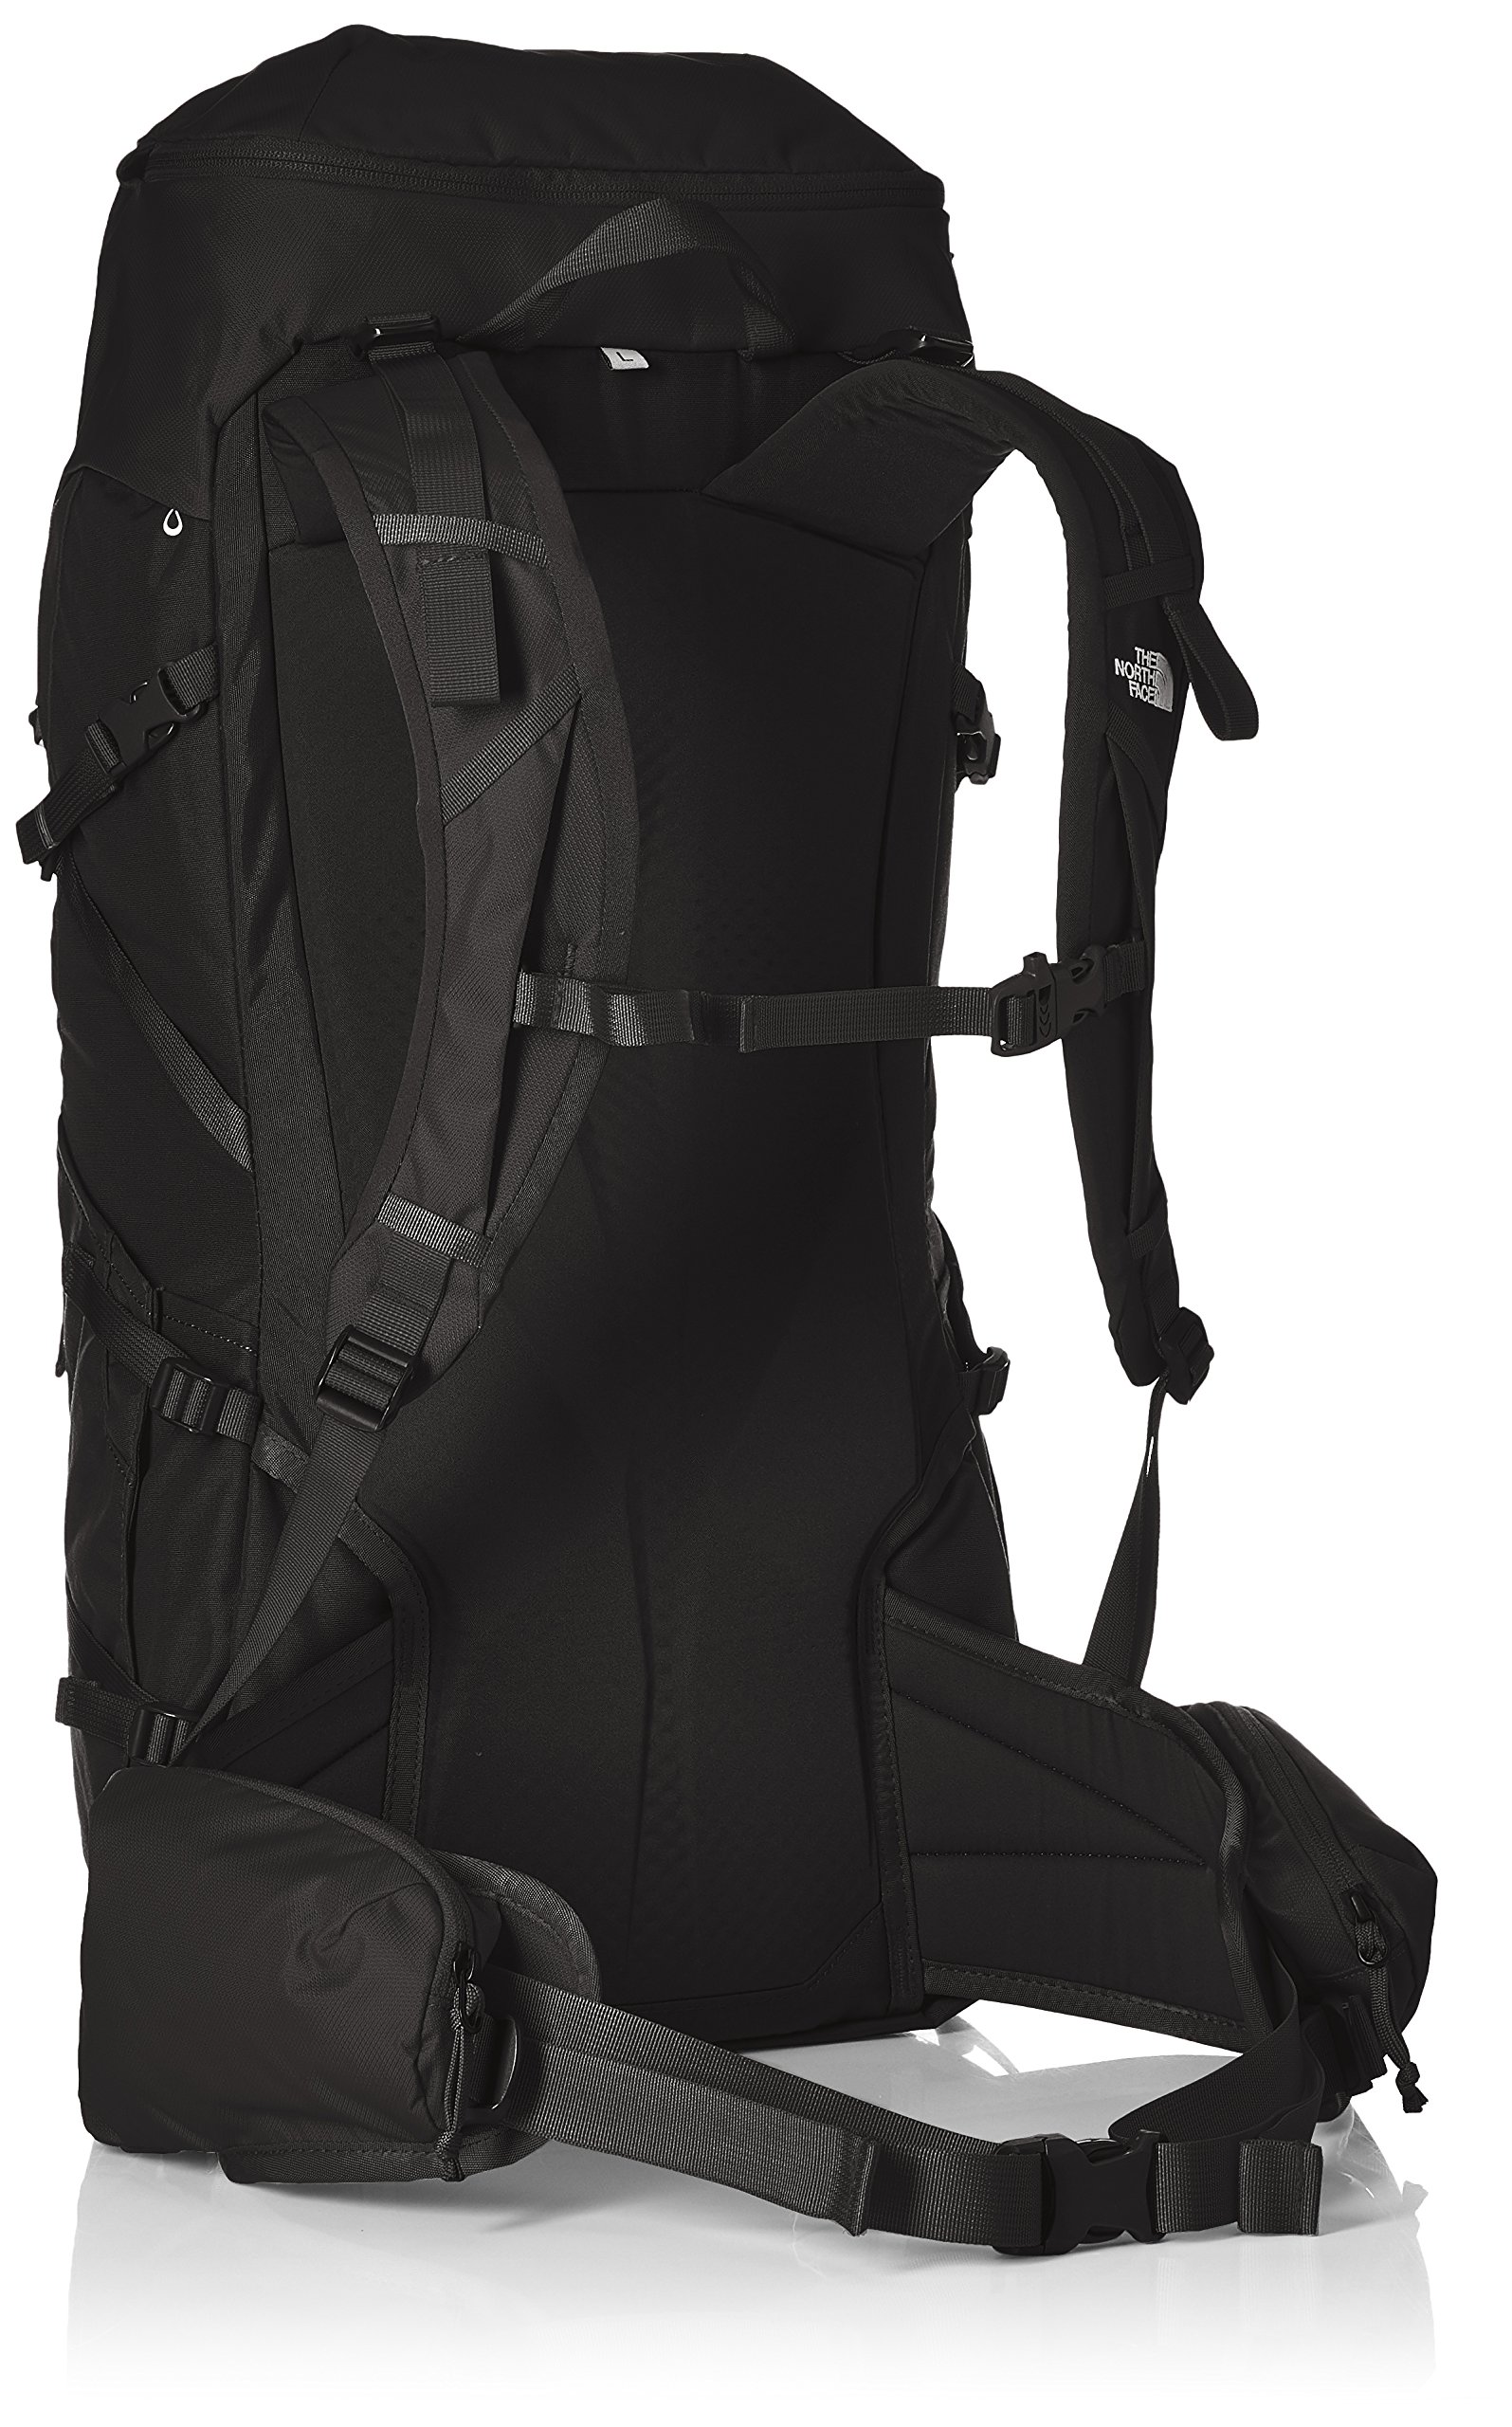 Buy The North Face NM61810 Tellus 35 Backpack / Bag | Fado168